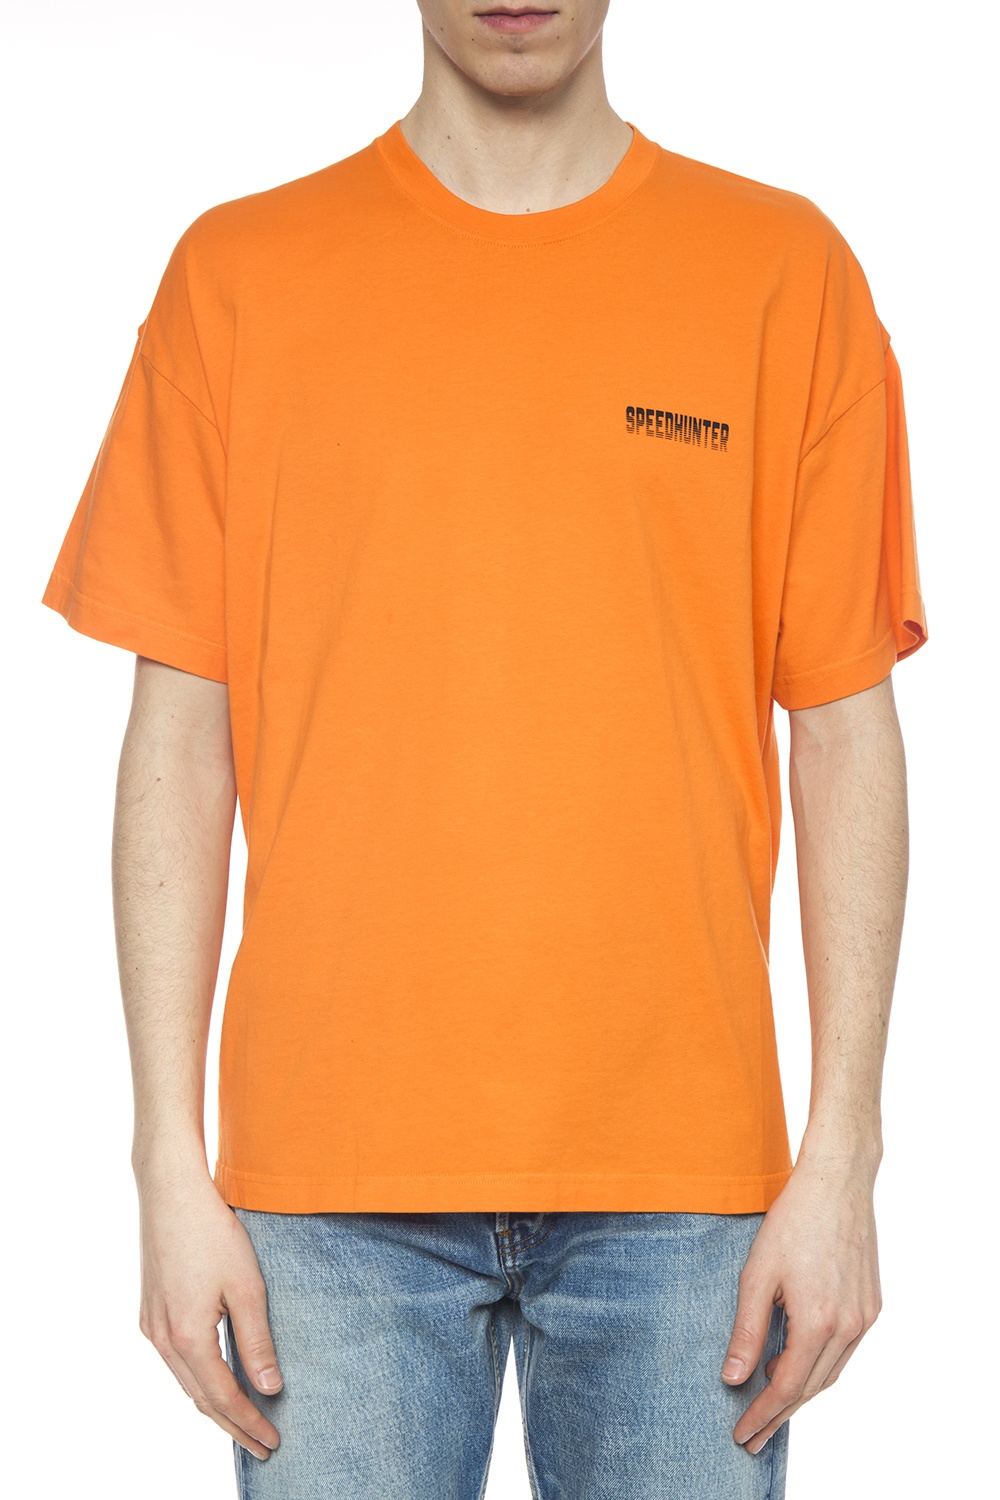 balenciaga orange shirt